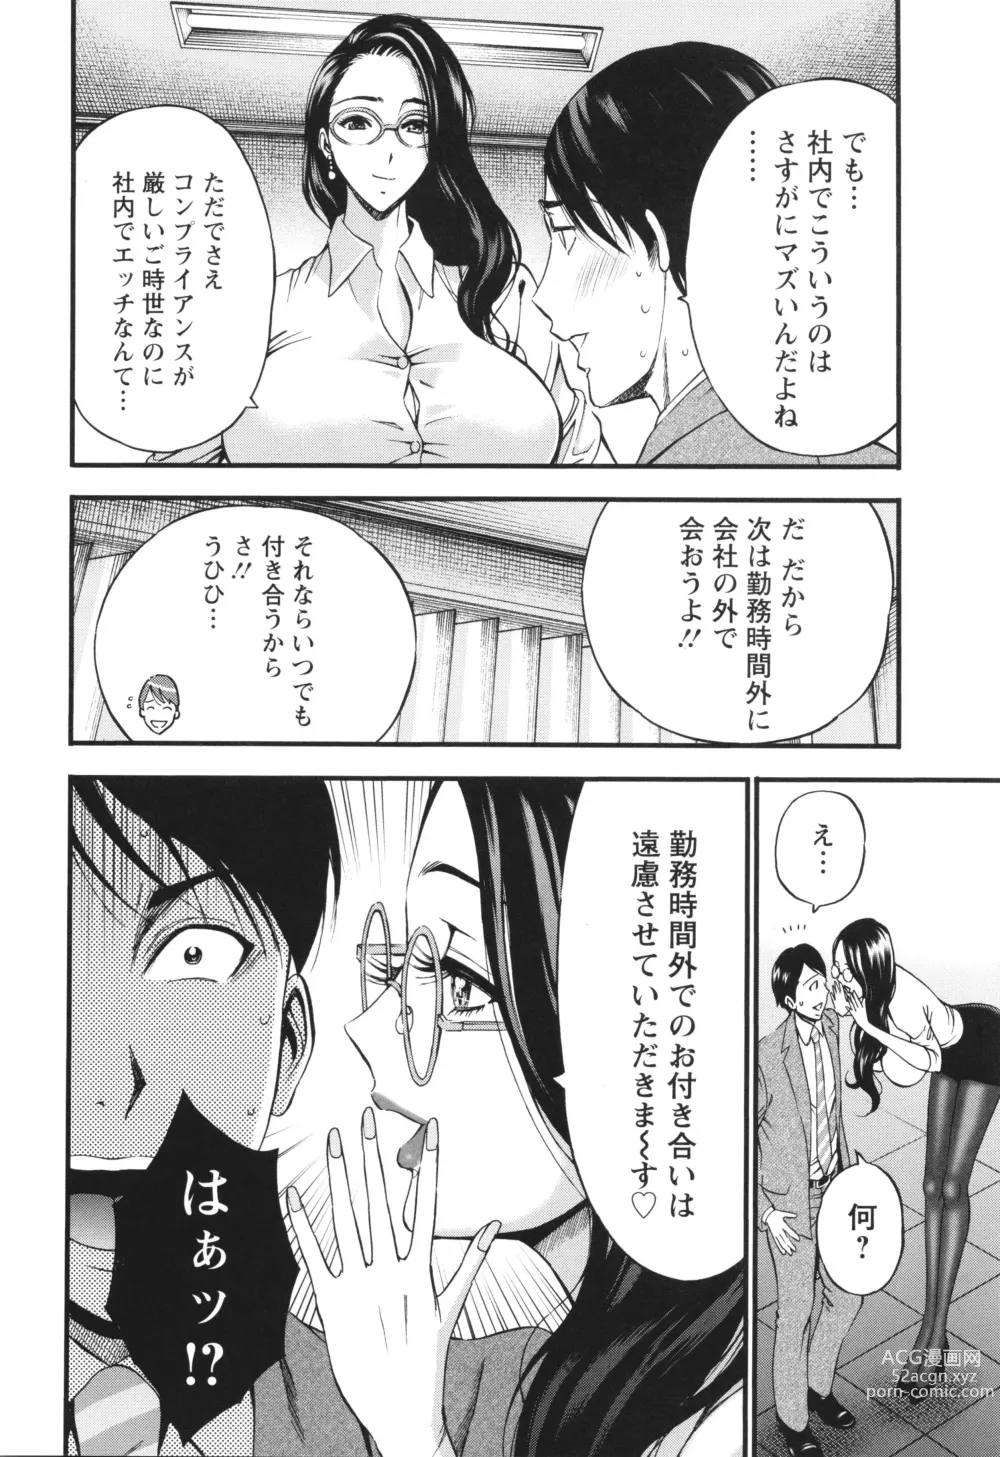 Page 32 of manga Compla Yuruyuru Chimari-san  - Chimaris compliance awareness is very lax.